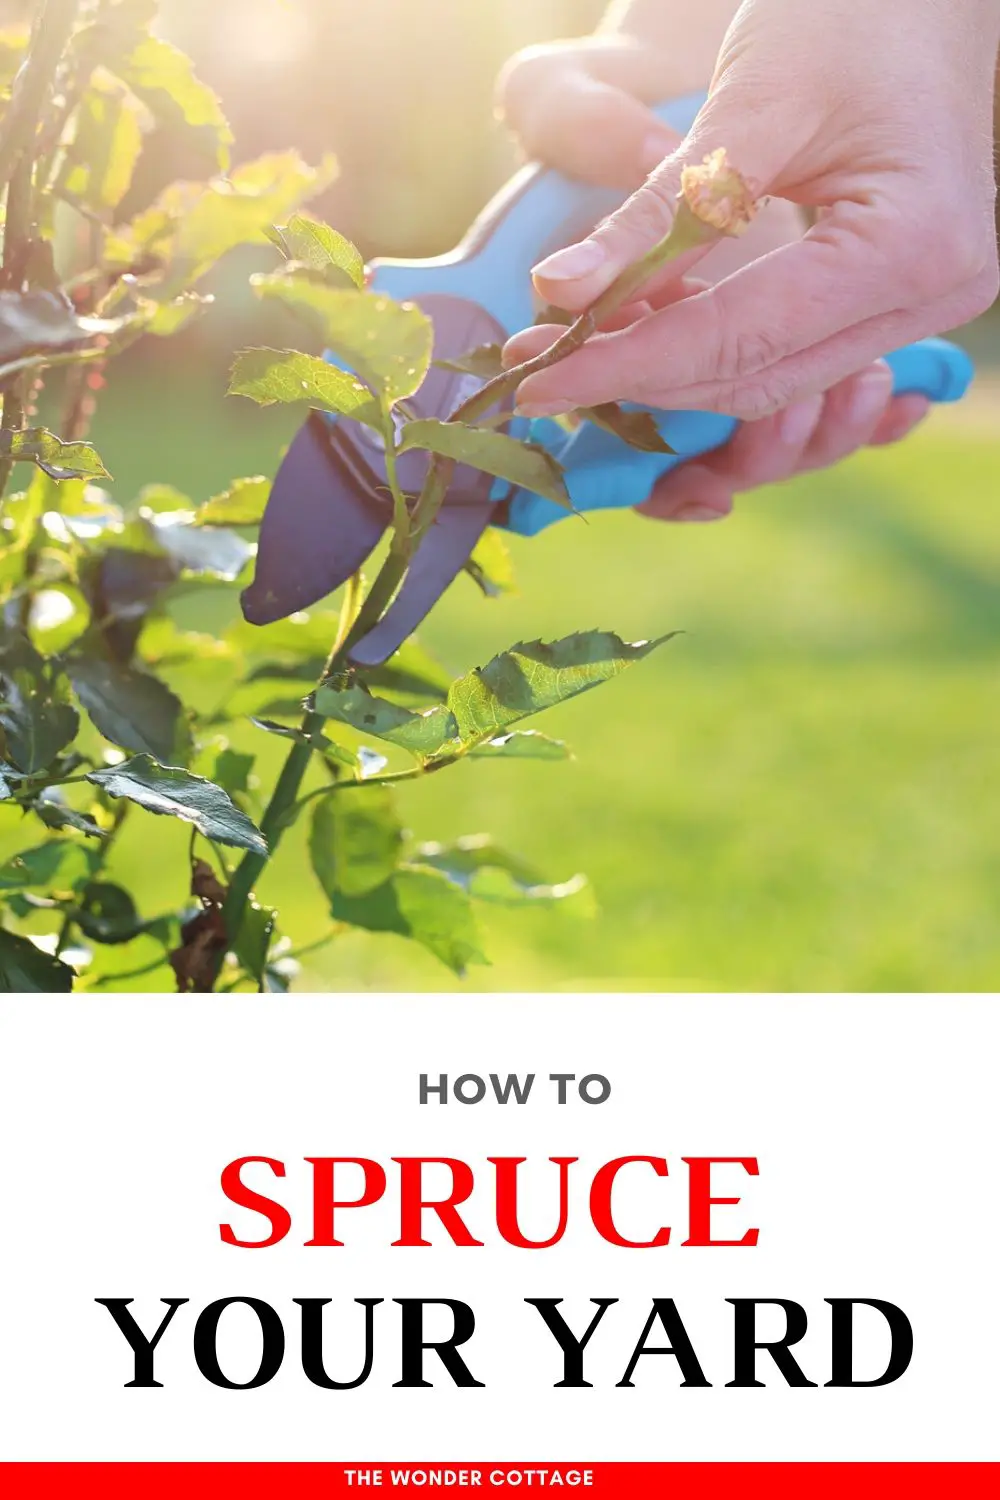 ways to spruce your yard